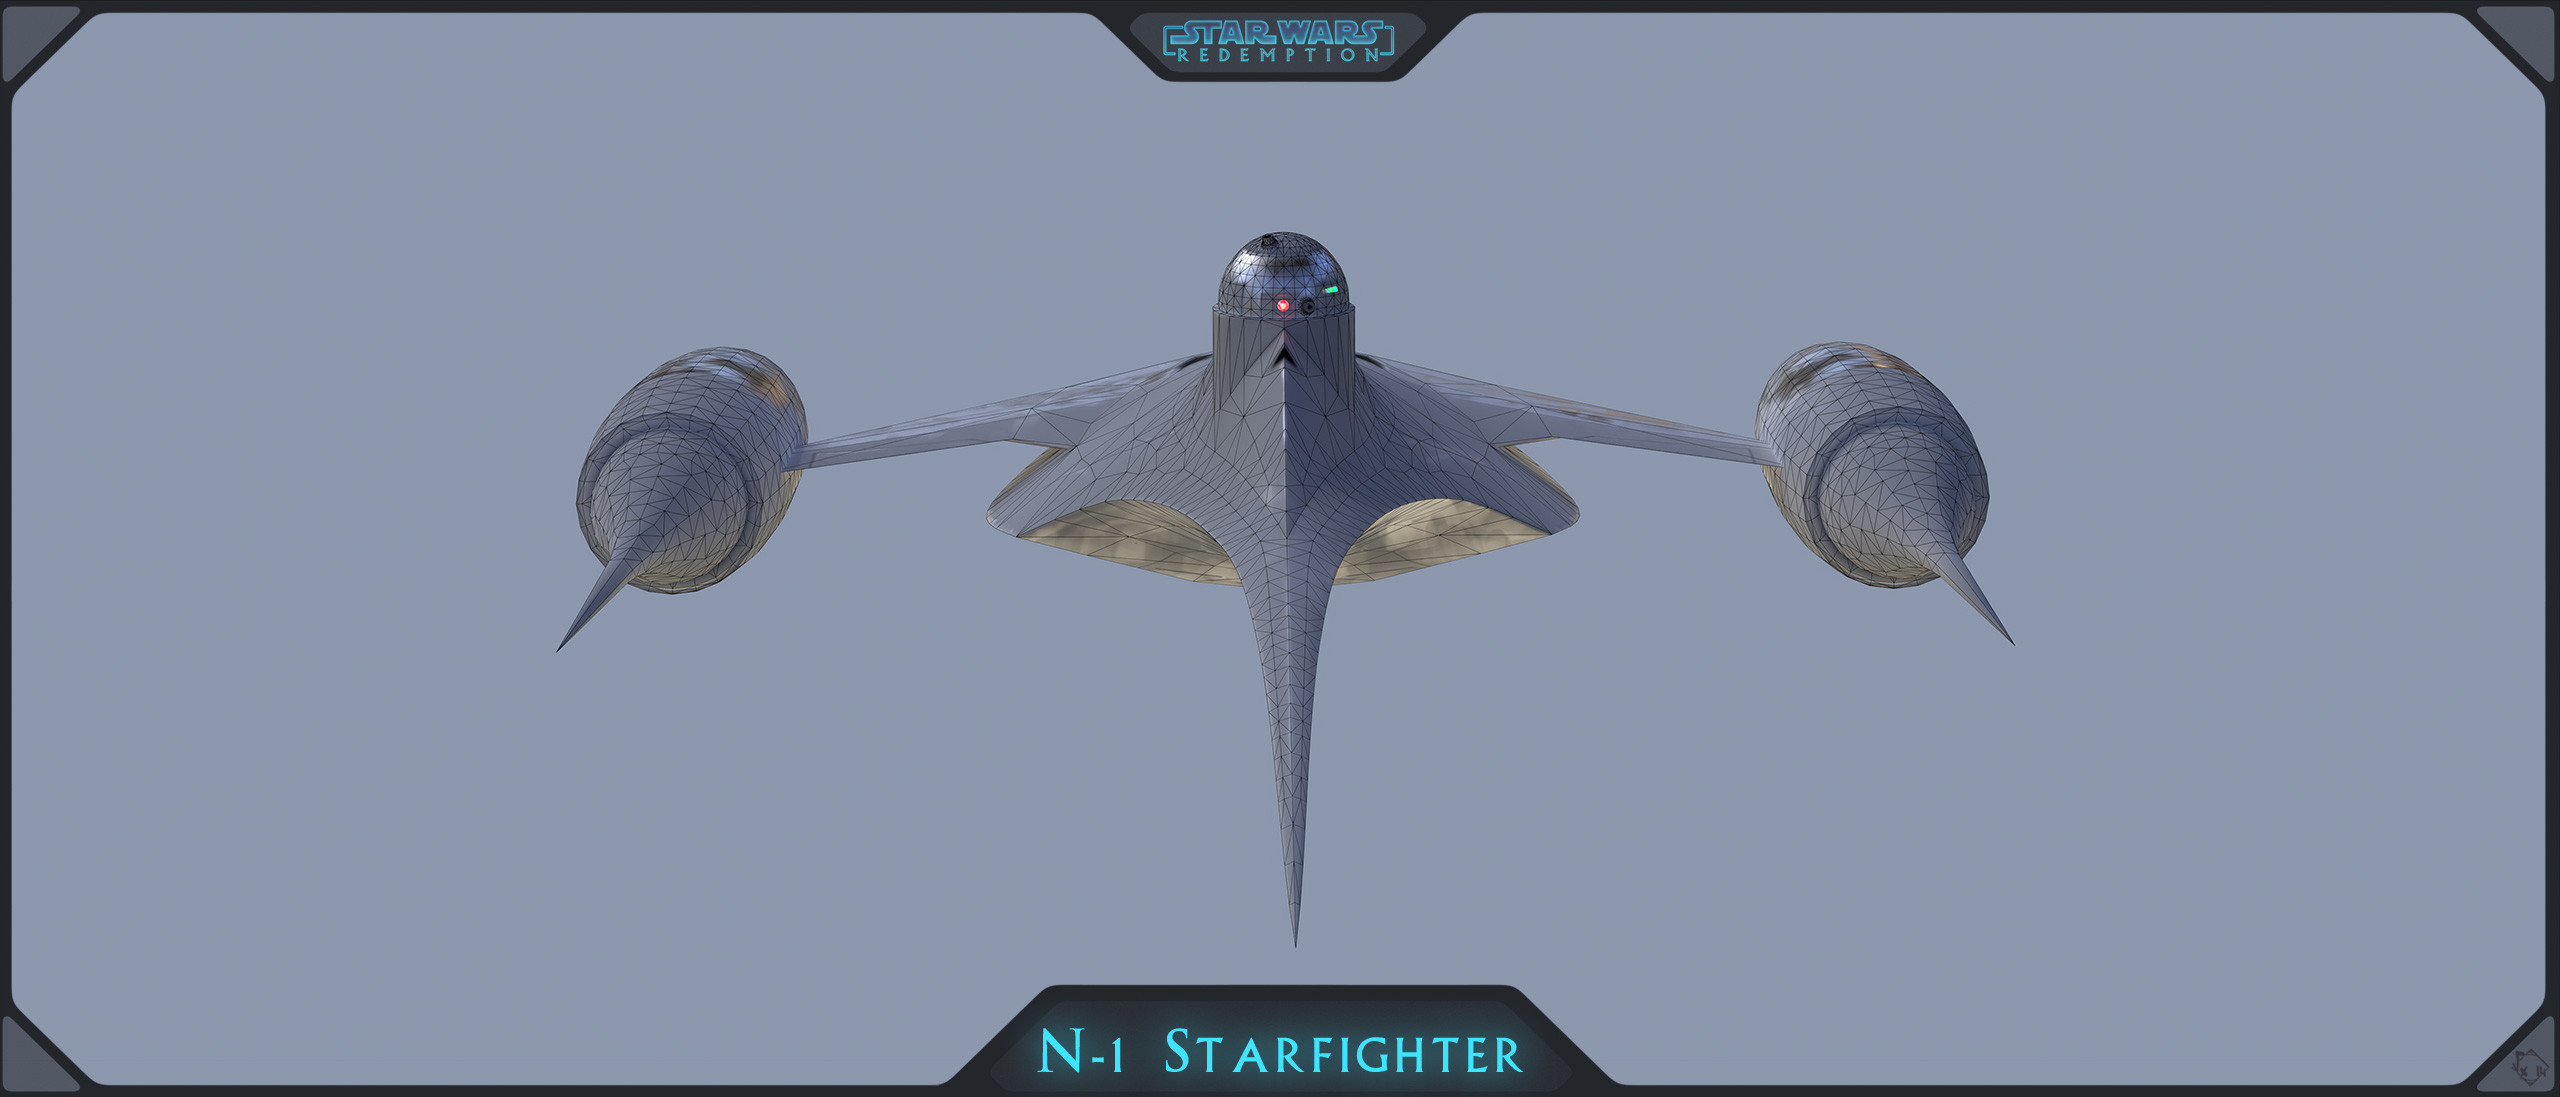 etienne-beschet-rd-prp-starfighter-n-1-0